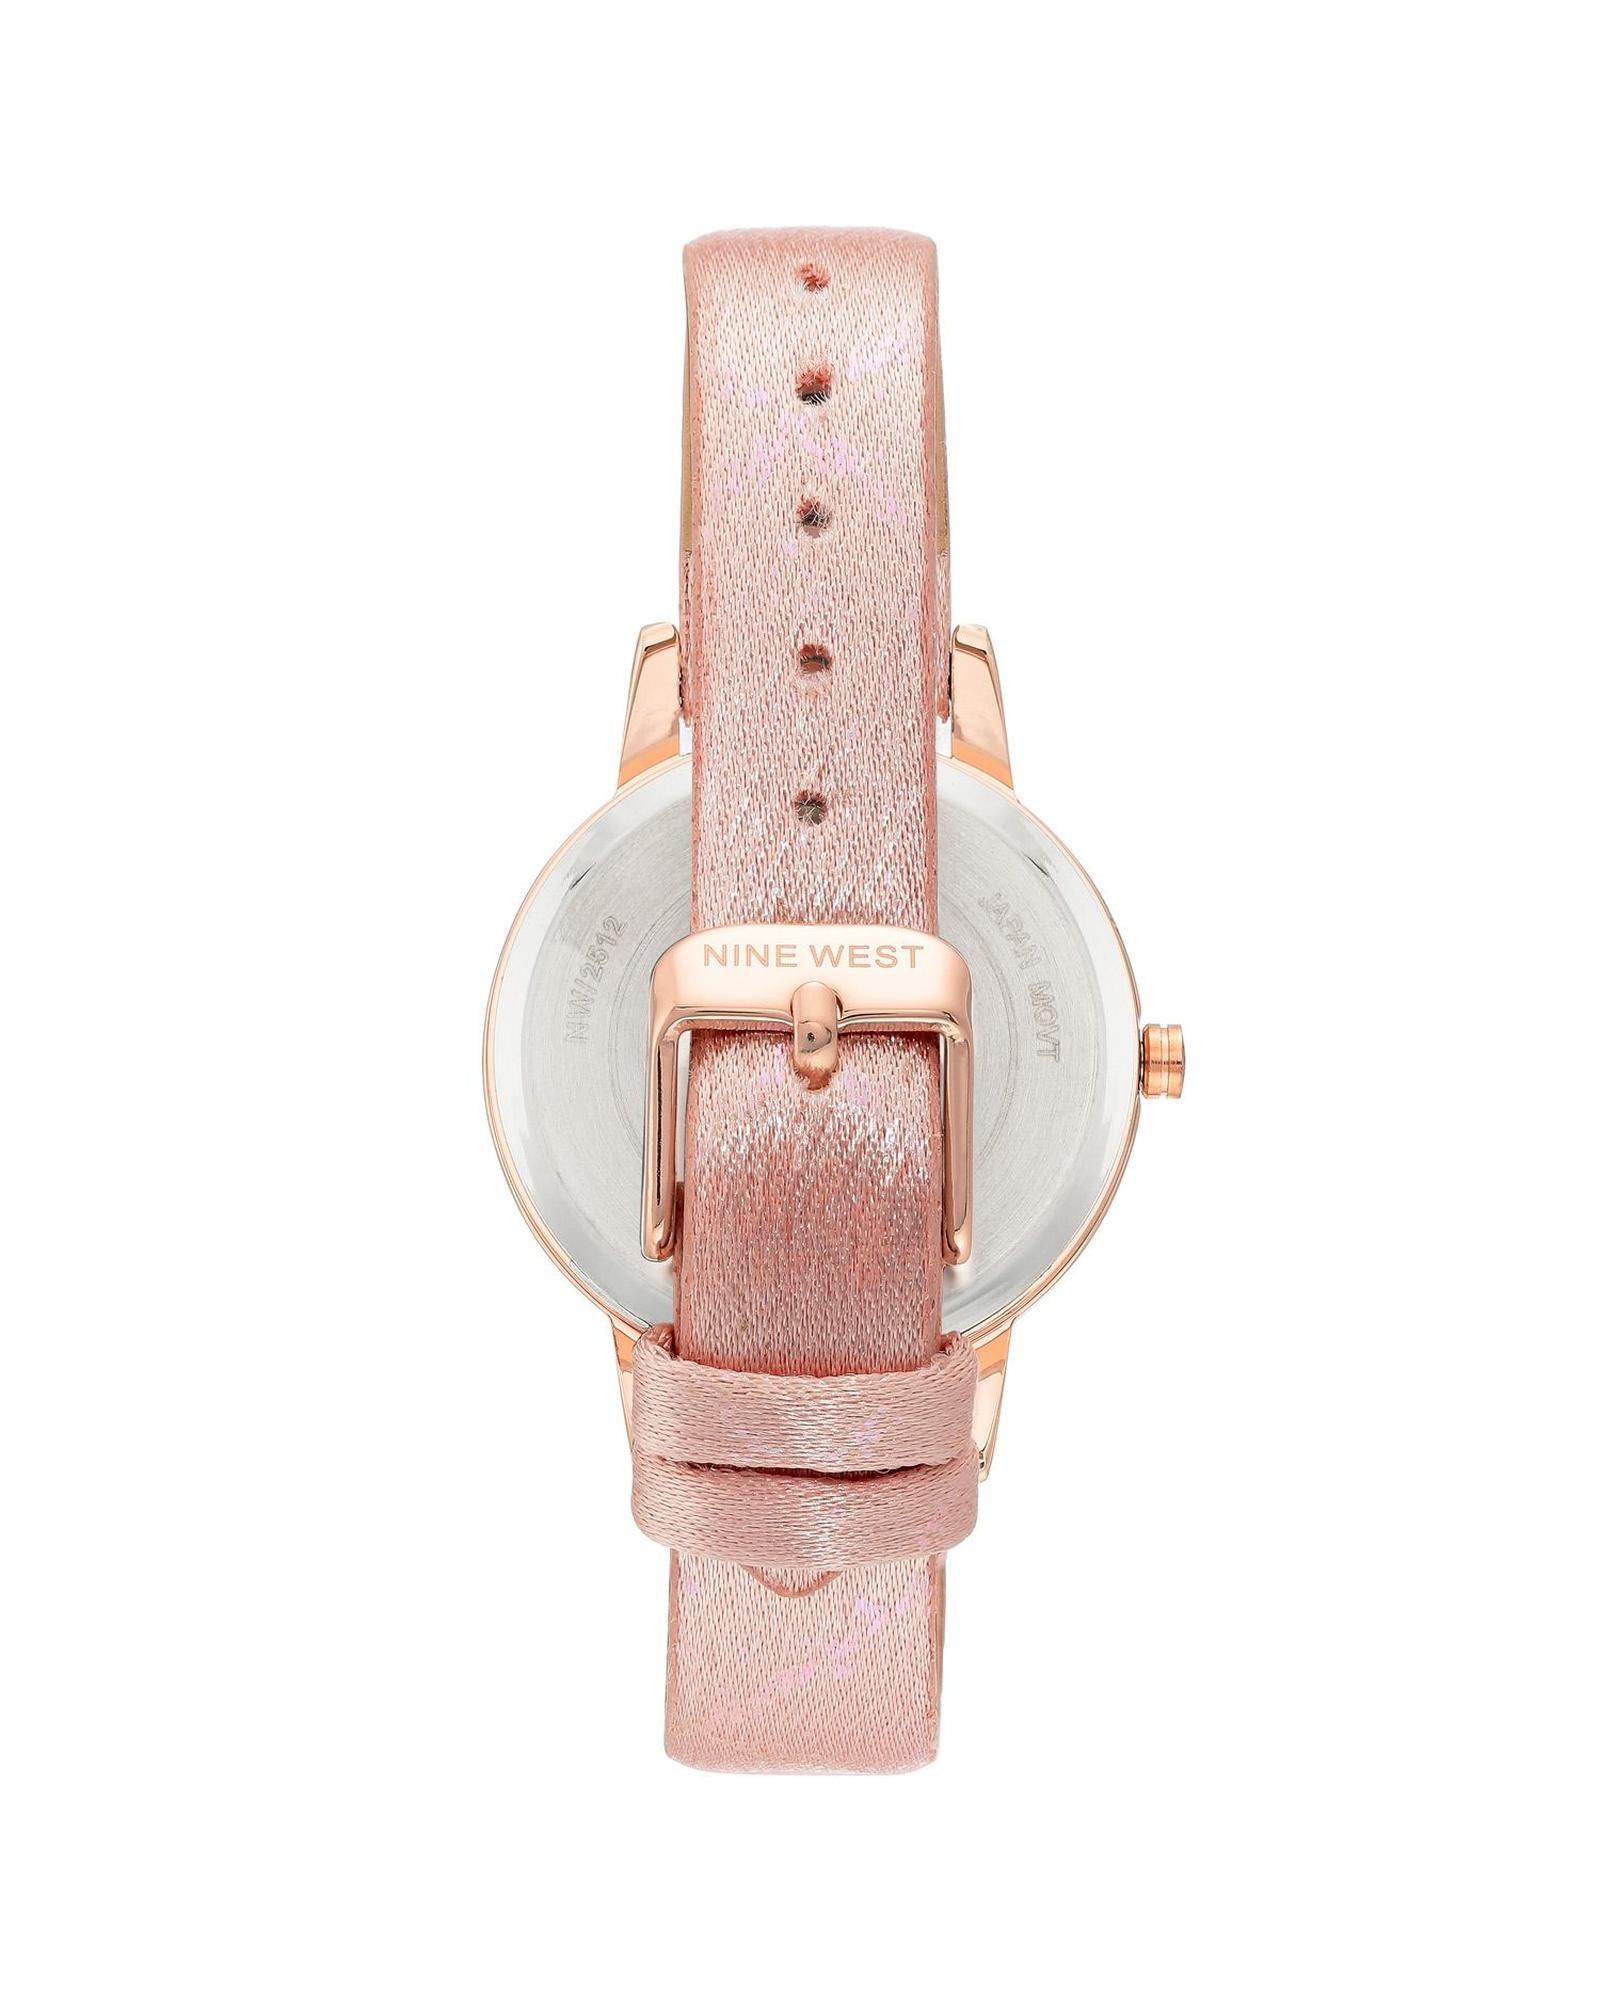 Rose Gold Fashion Quartz Watch with Leatherette Wristband One Size Women